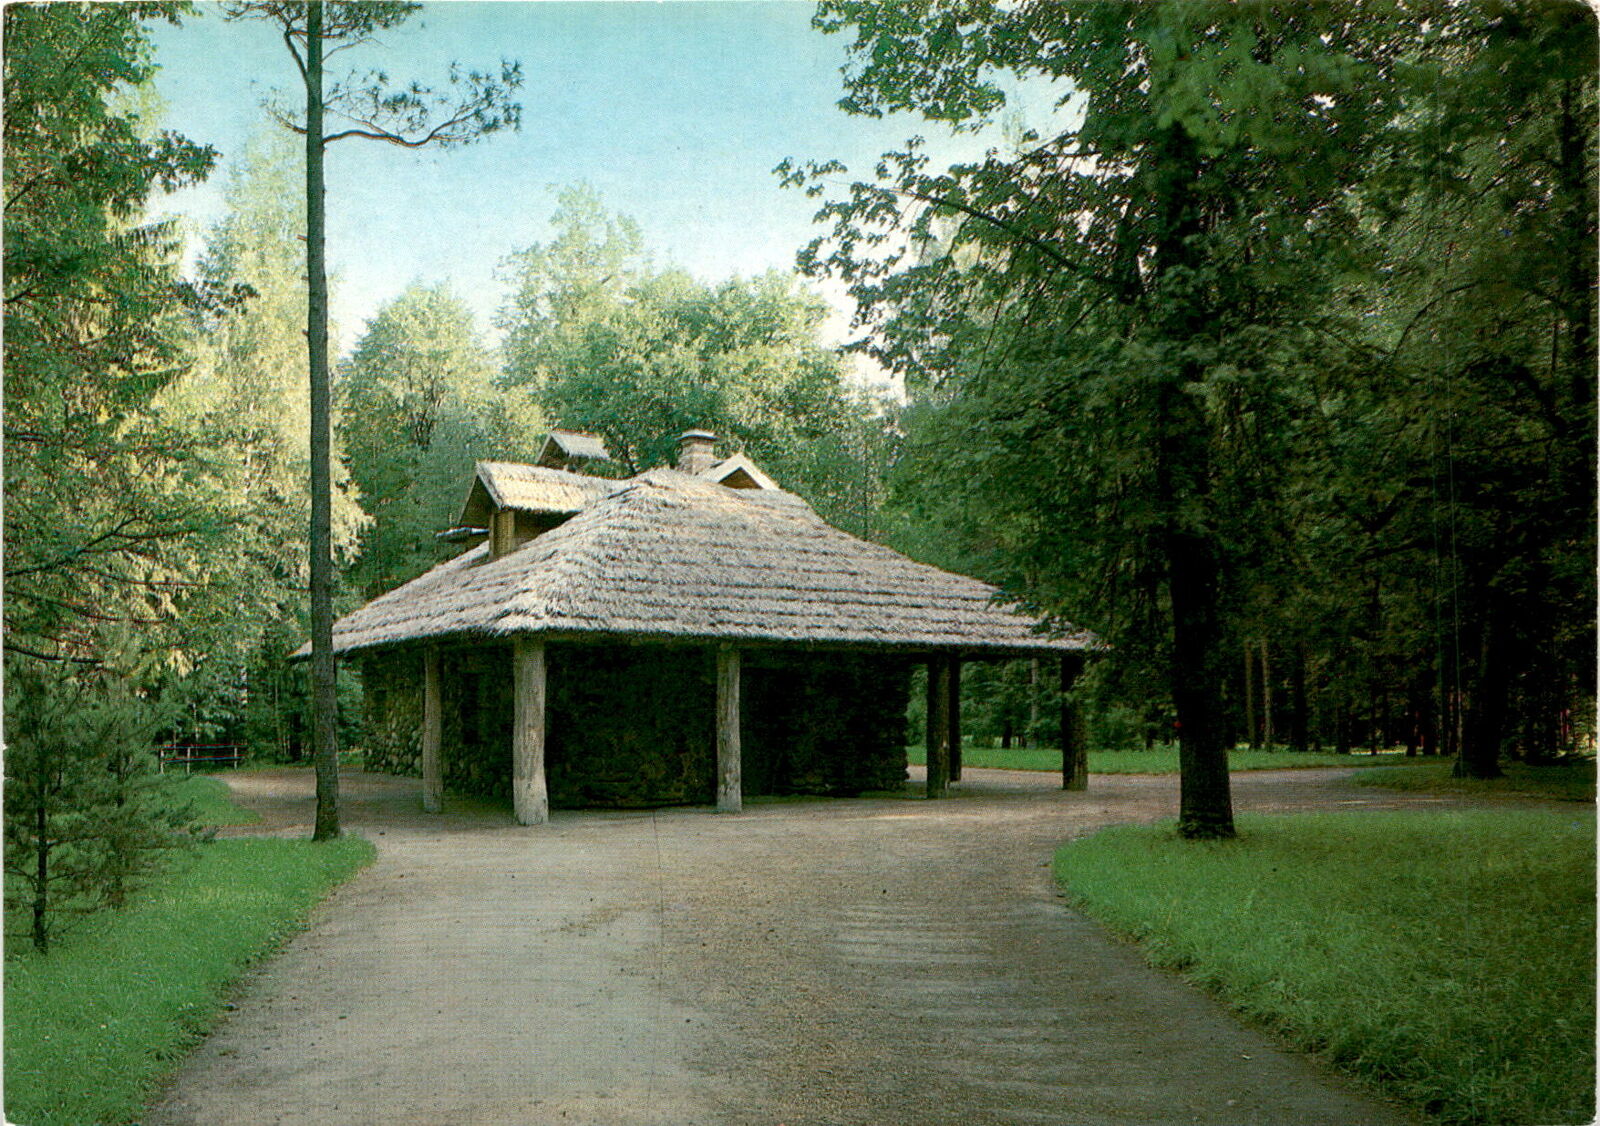 Pavlovsk, St. Petersburg, Russia, Park, Dairy, Charles Cameron, landsca postcard